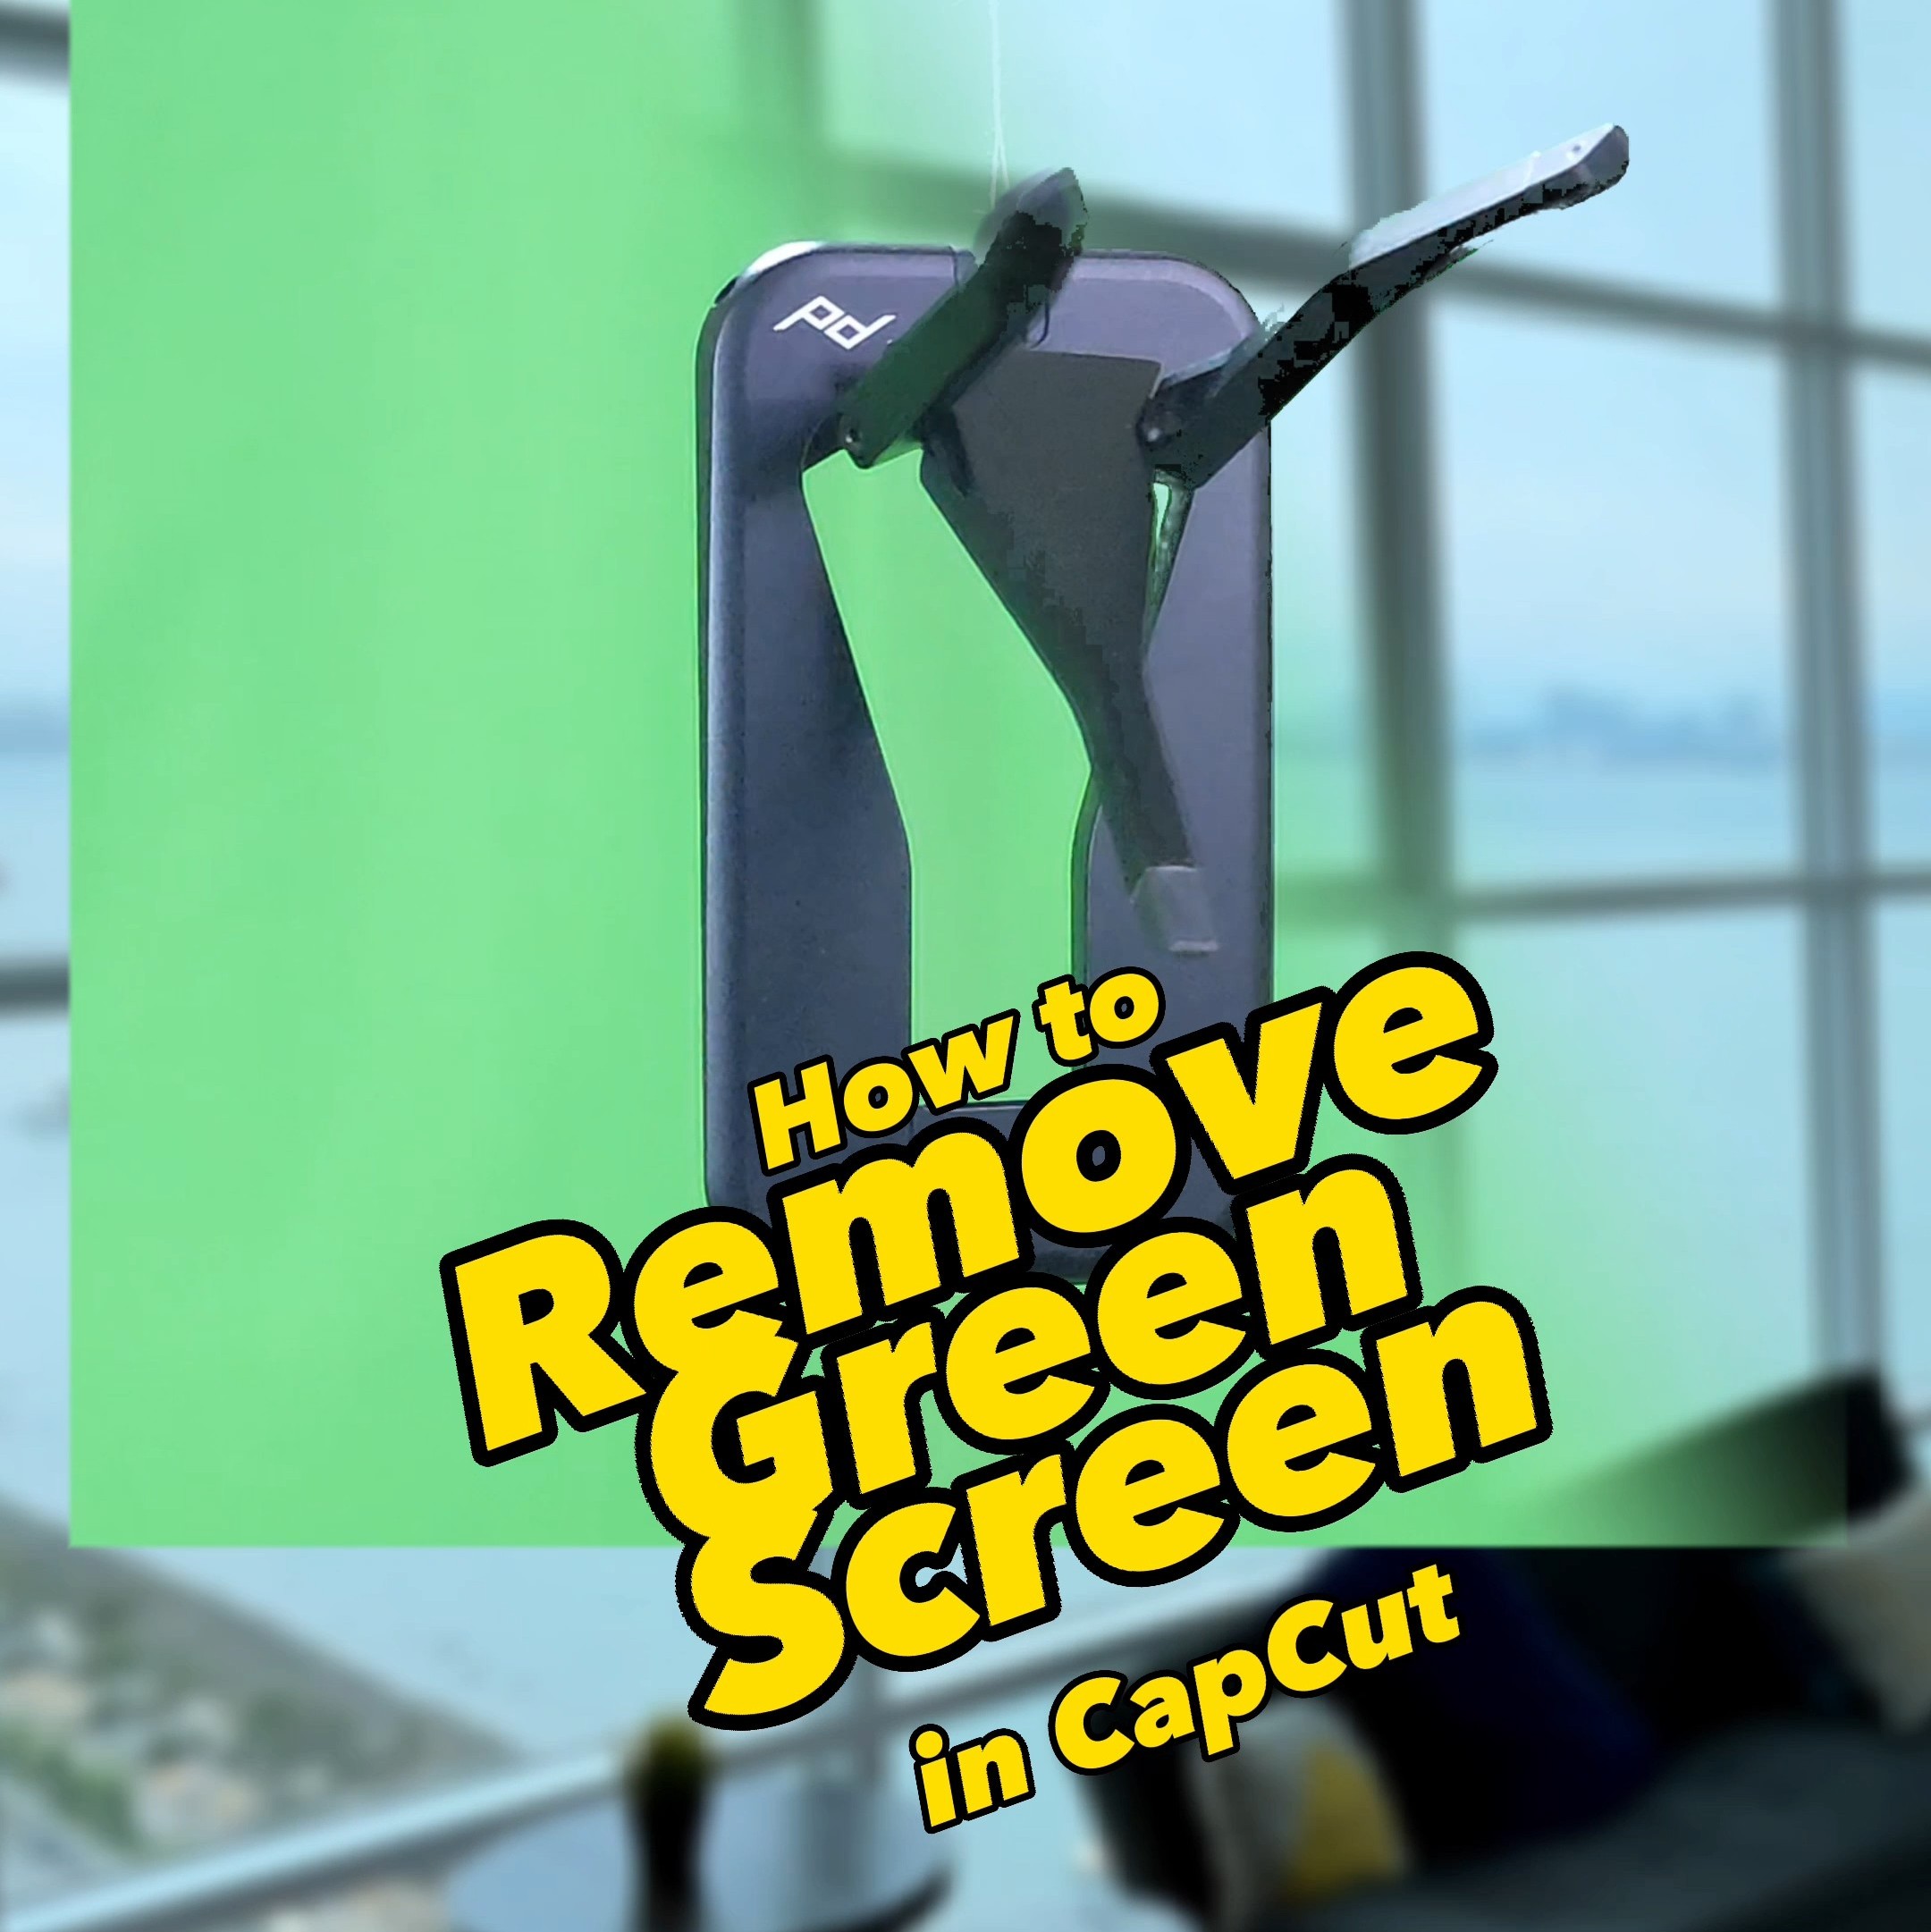 capcut-green-screen-adrian-video-image